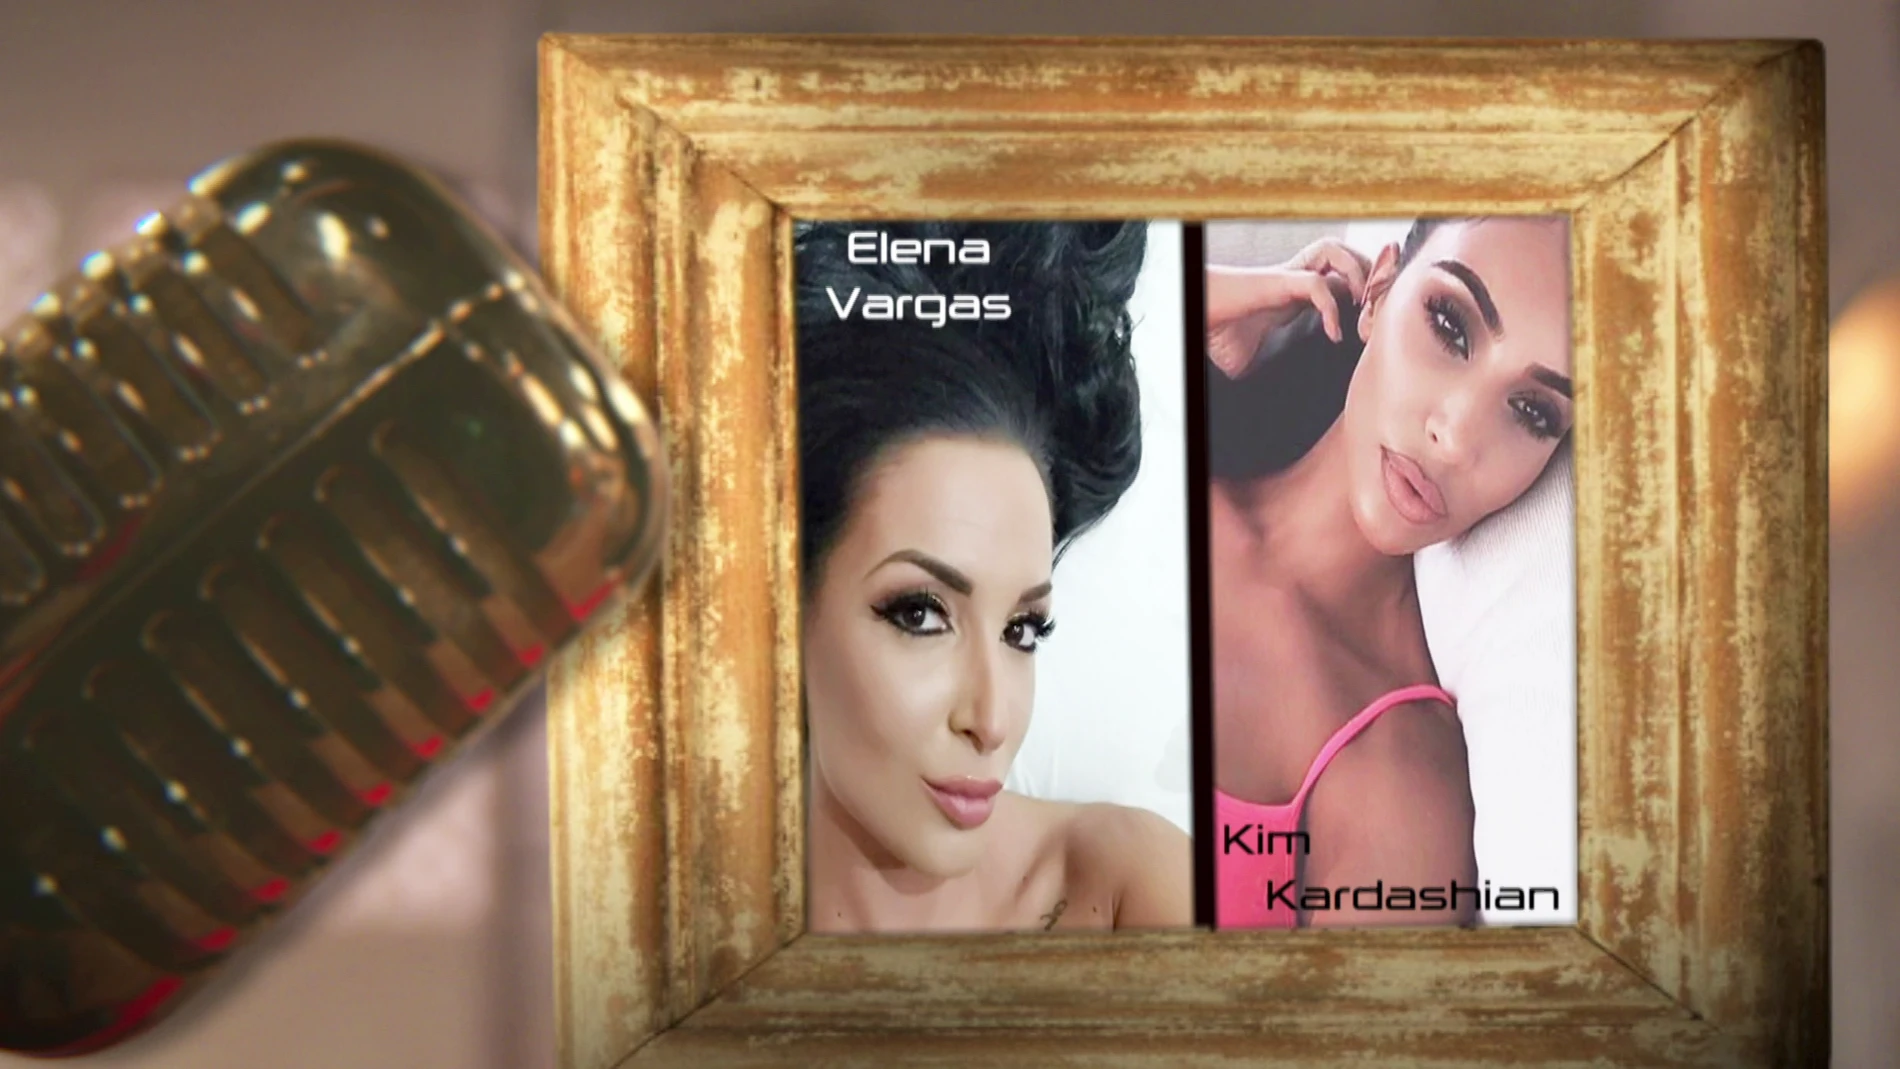 VÍDEO - Elena Vargas: “Kim Kardashian es mi referente” 